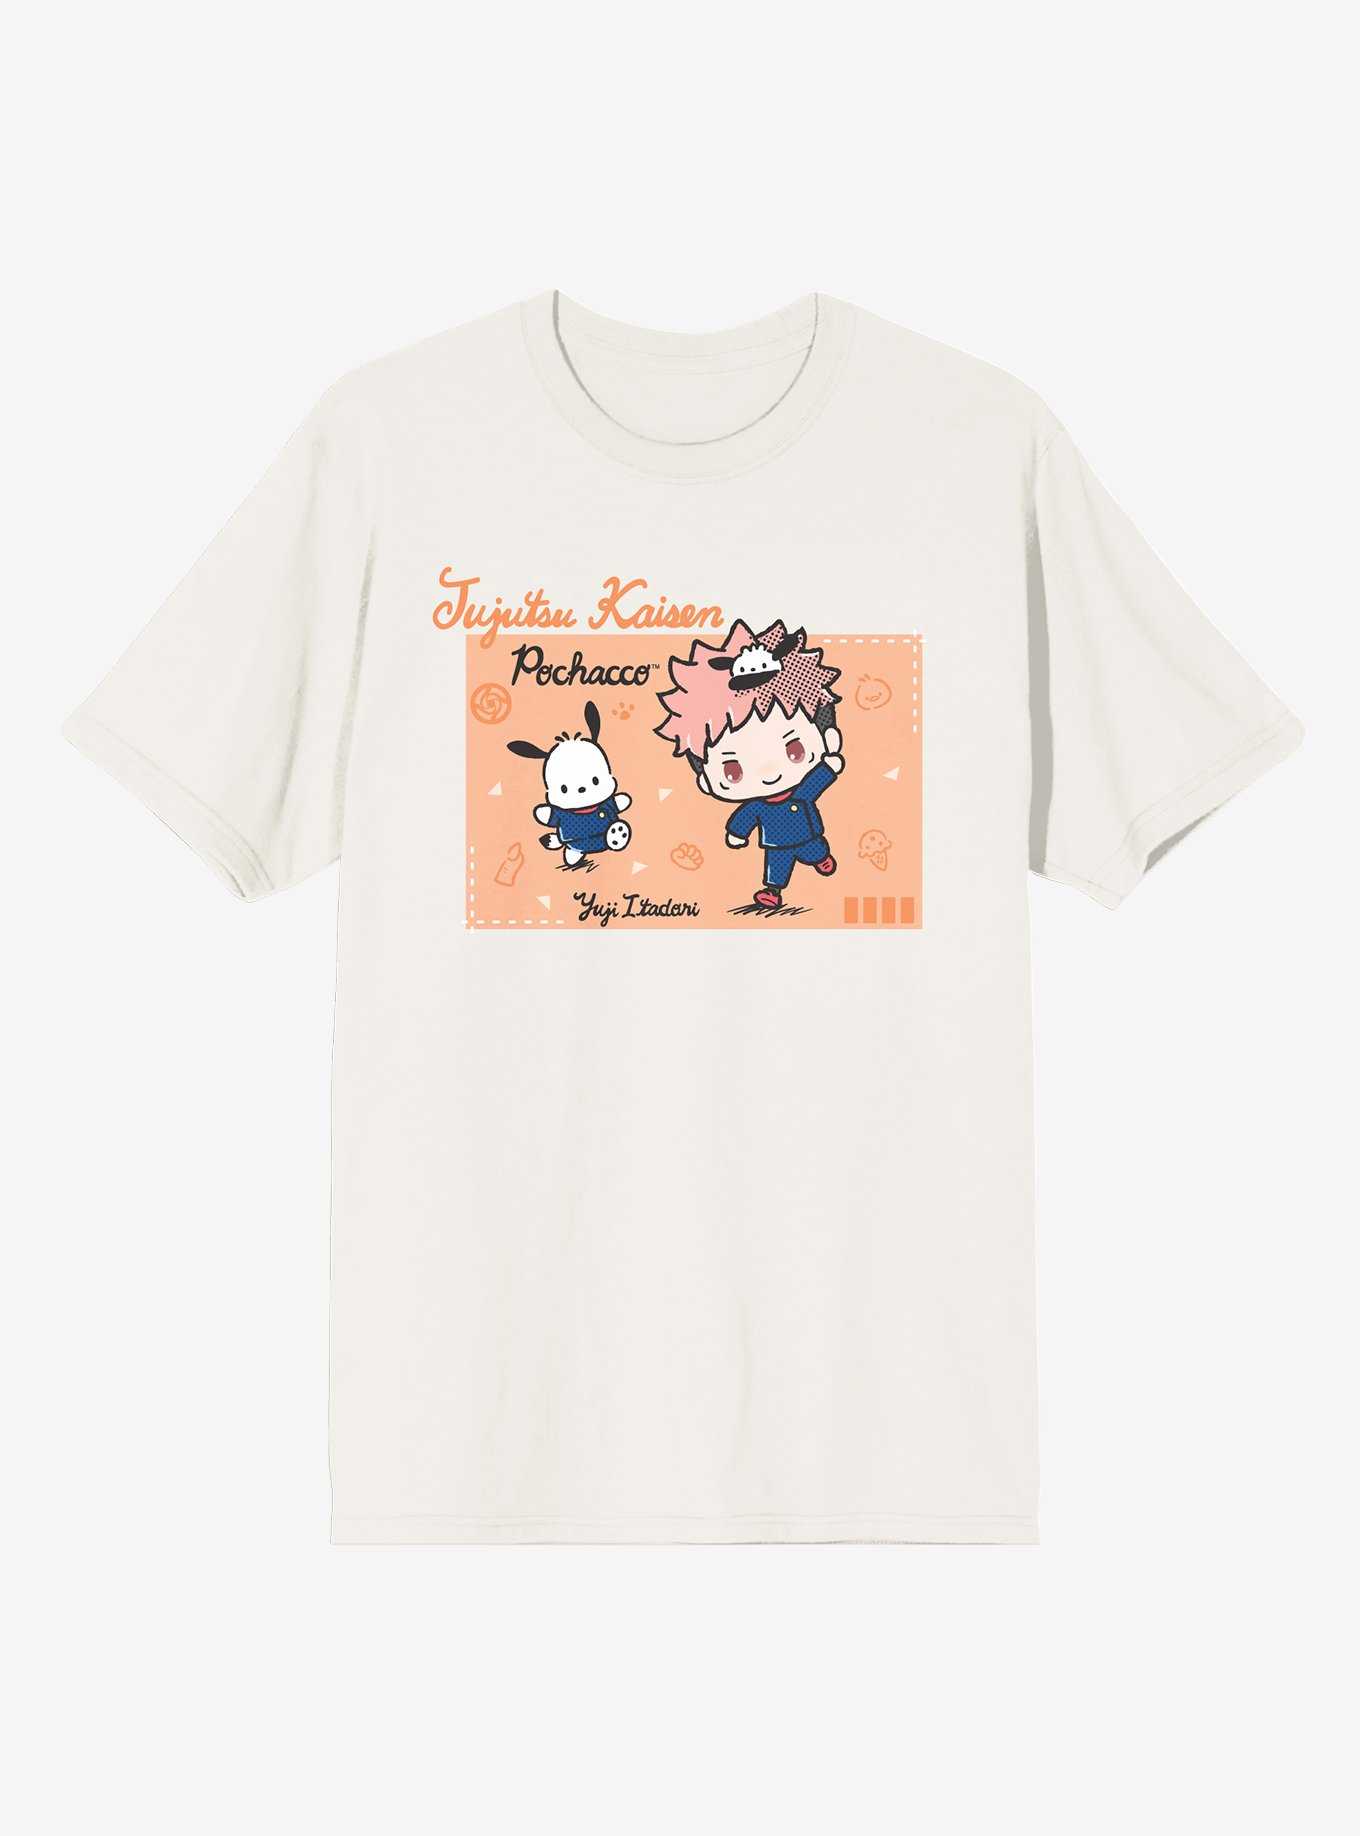 Smol Chibi Toji Happy Jjk Jujutsu Kaisen Merch Cute Classic T-Shirt Unisex  - AnniversaryTrending